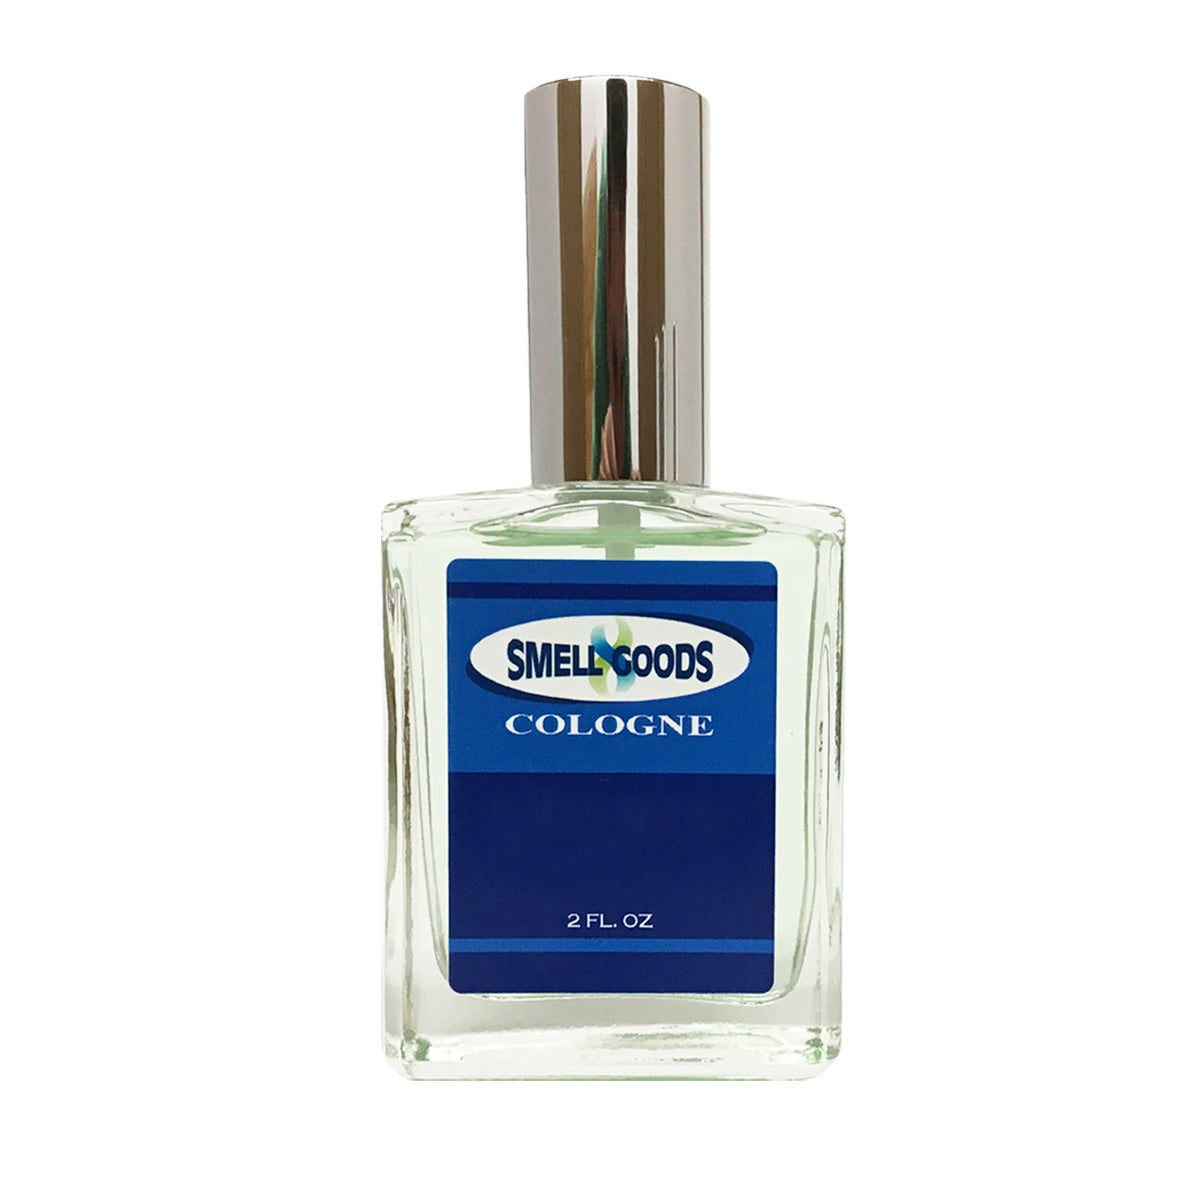 Bleu De Chanel Cologne 3.4 oz Parfum Spray for Men – Flippamart